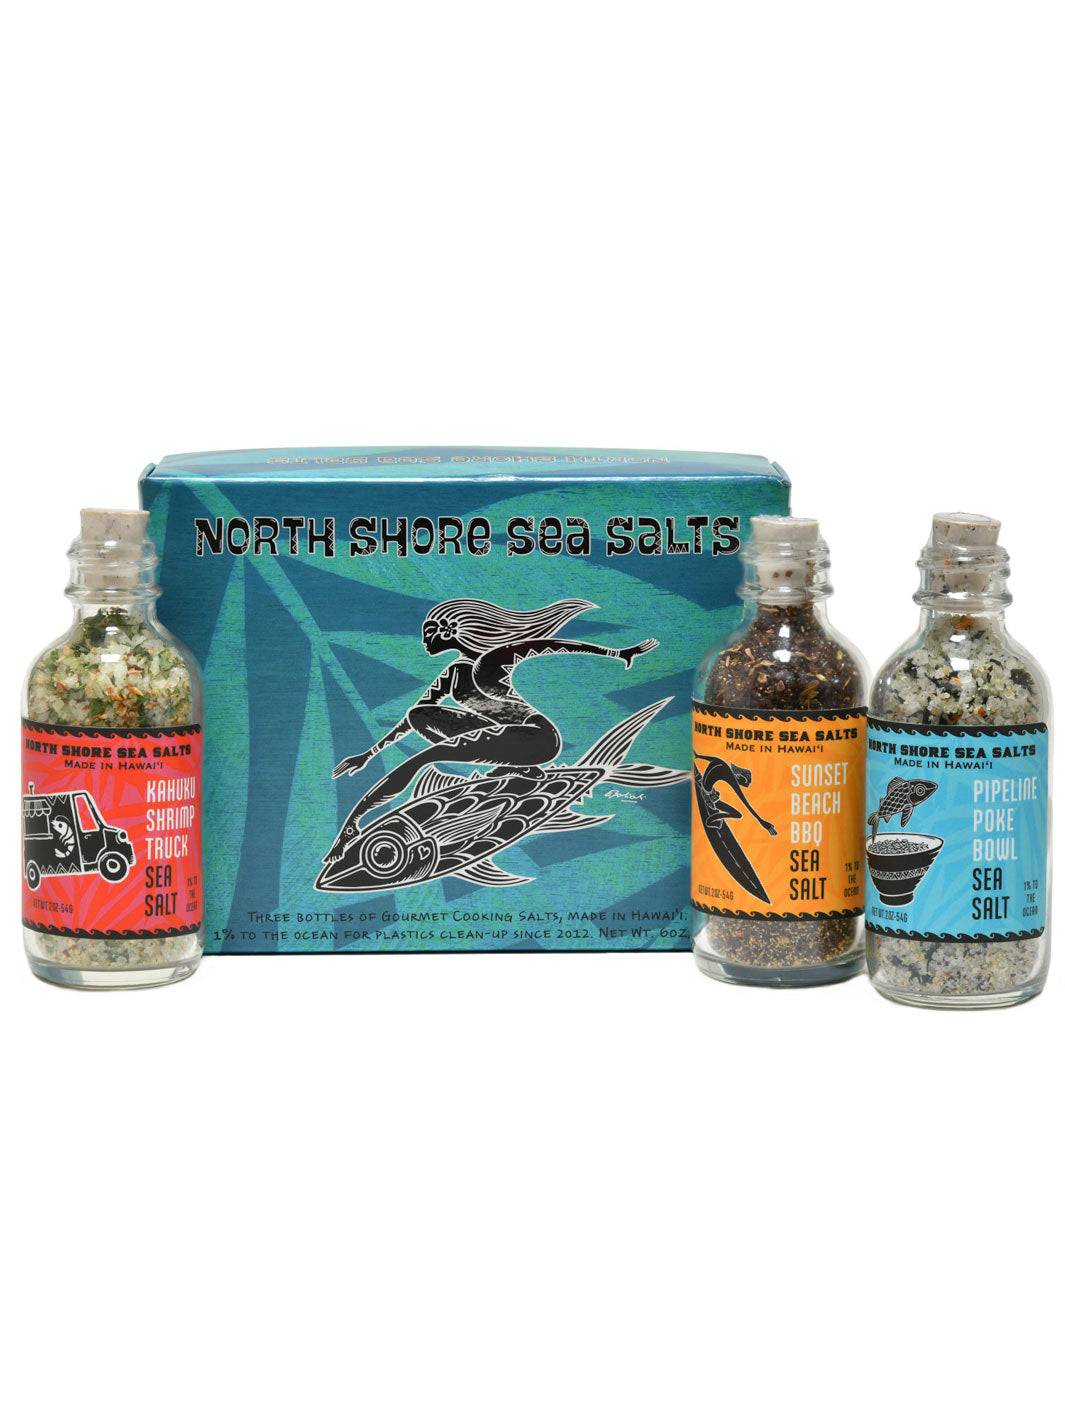 North Shore Hawaiian Sea Salts Bottles with Box